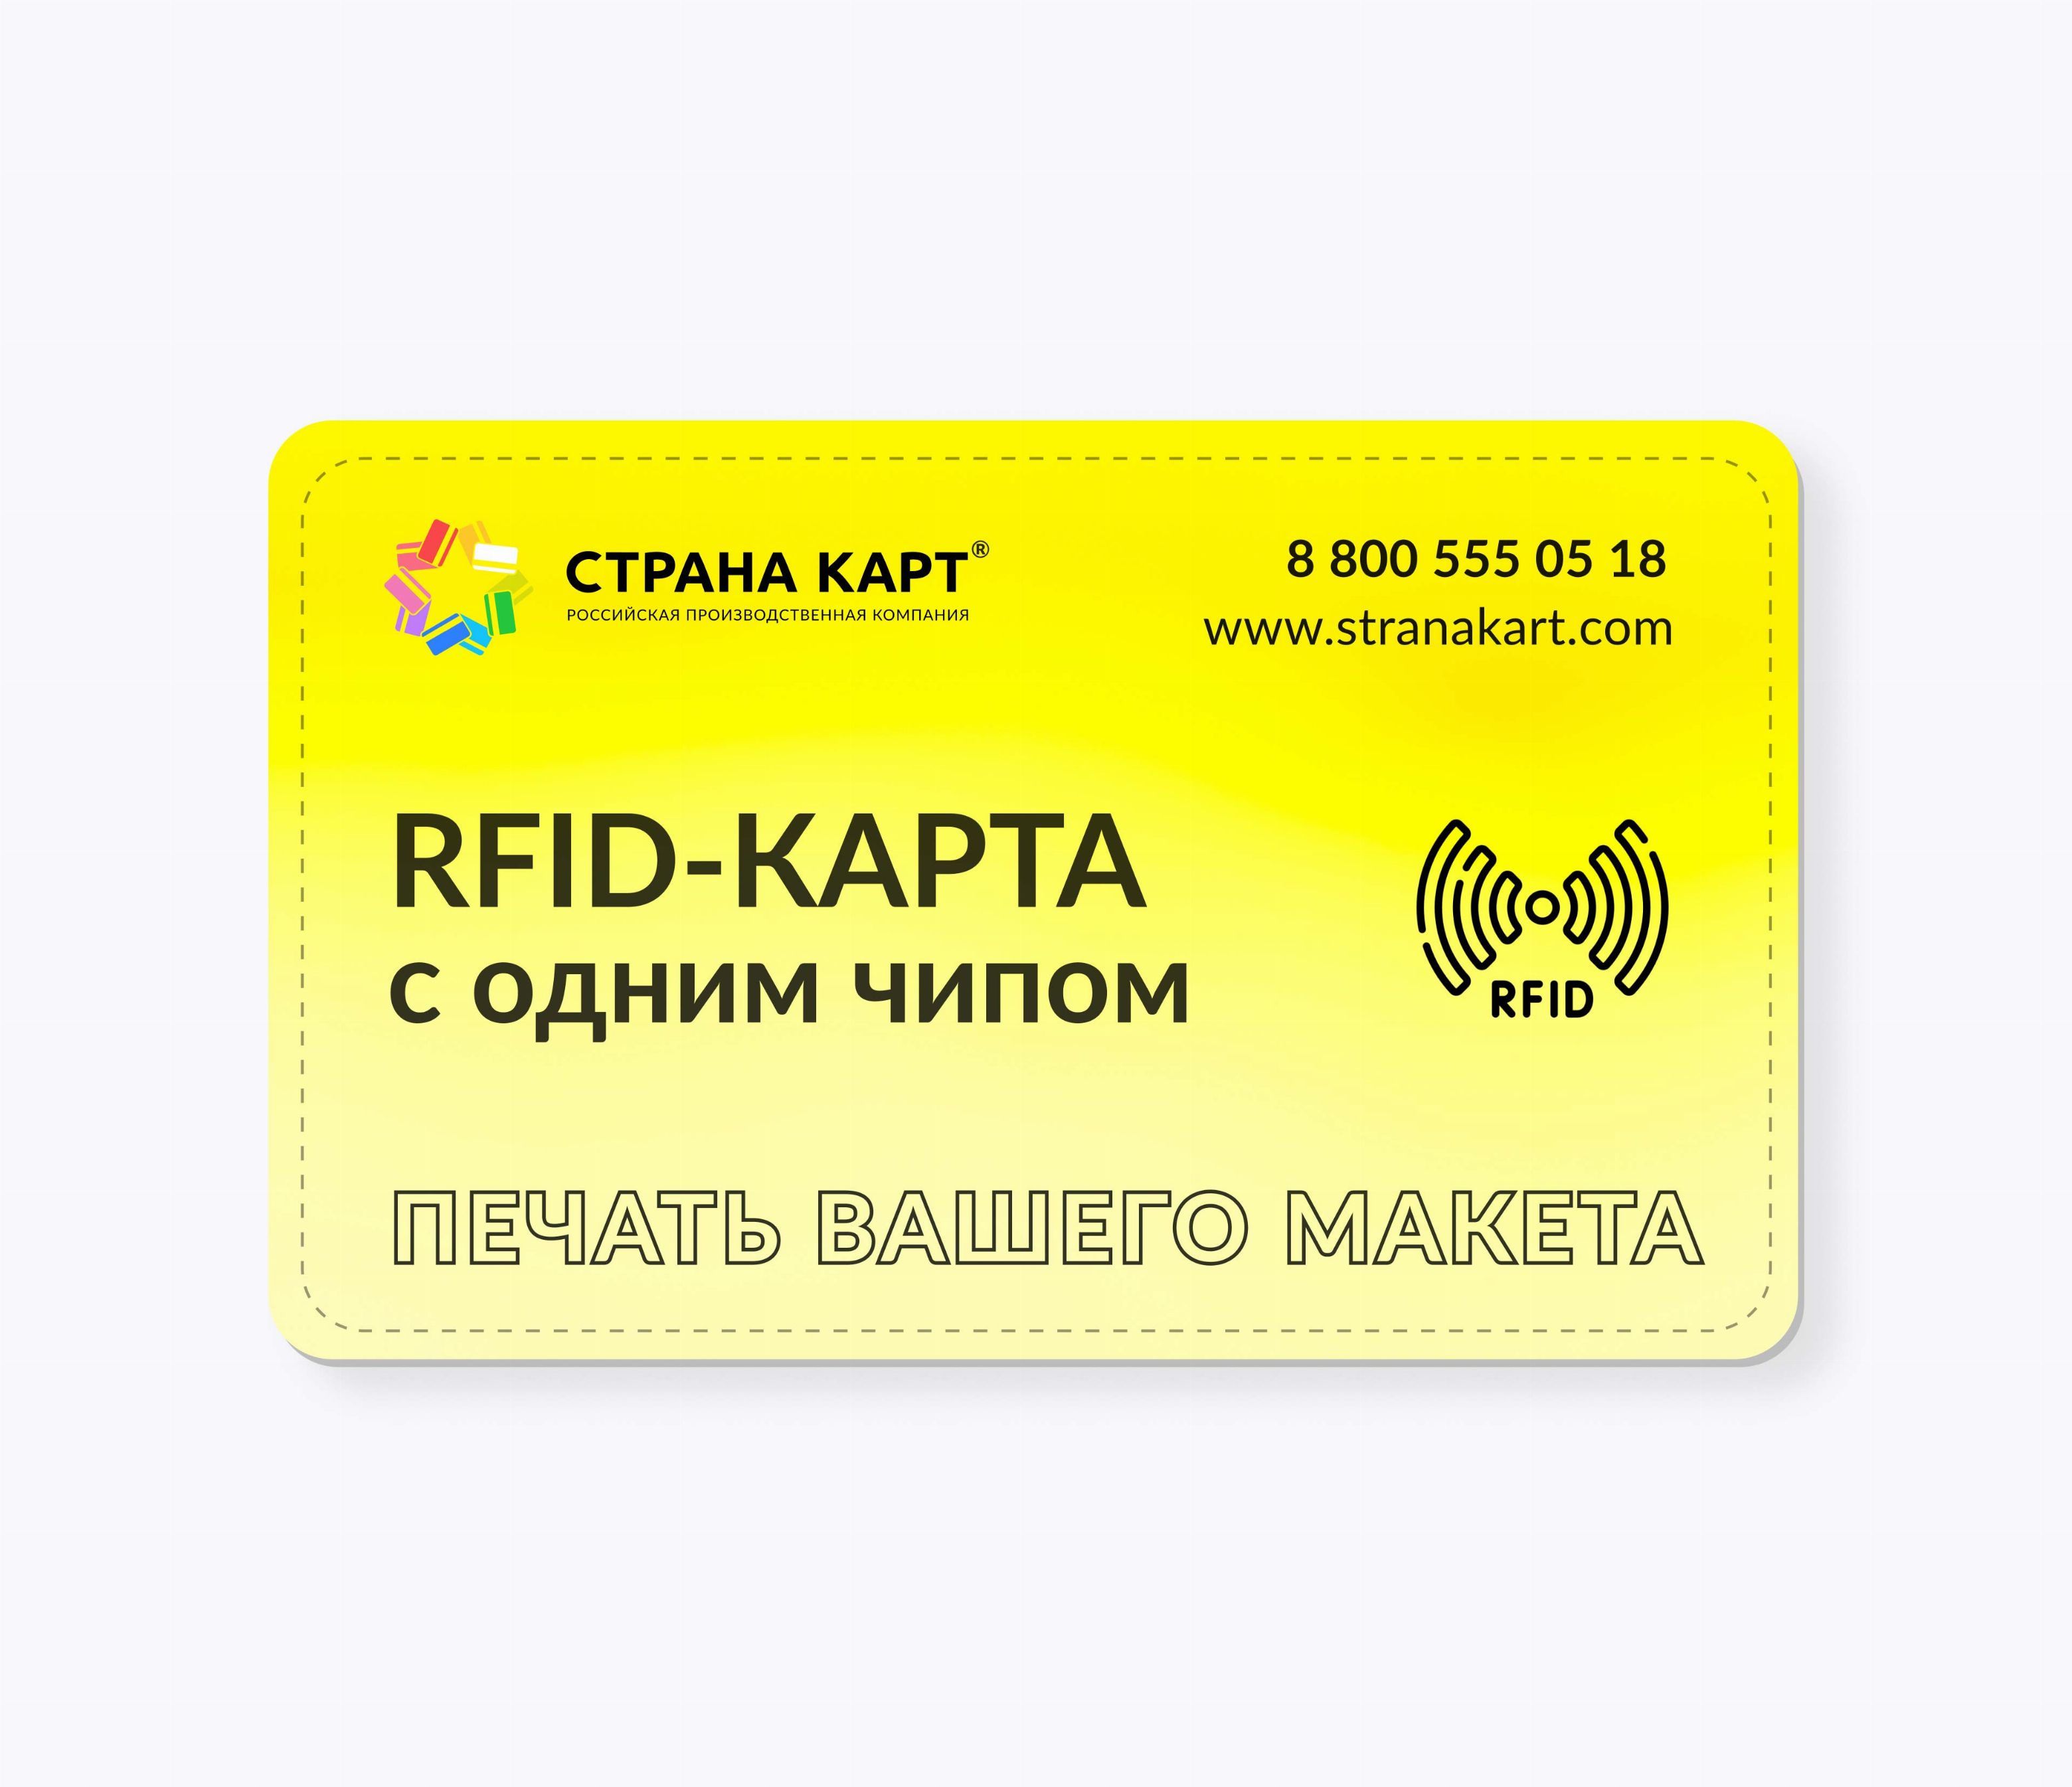 RFID-карты с чипом NXP MIFARE Plus X 4k 7 byte UID печать вашего макета RFID-карты с чипом NXP MIFARE Plus X 4k 7 byte UID